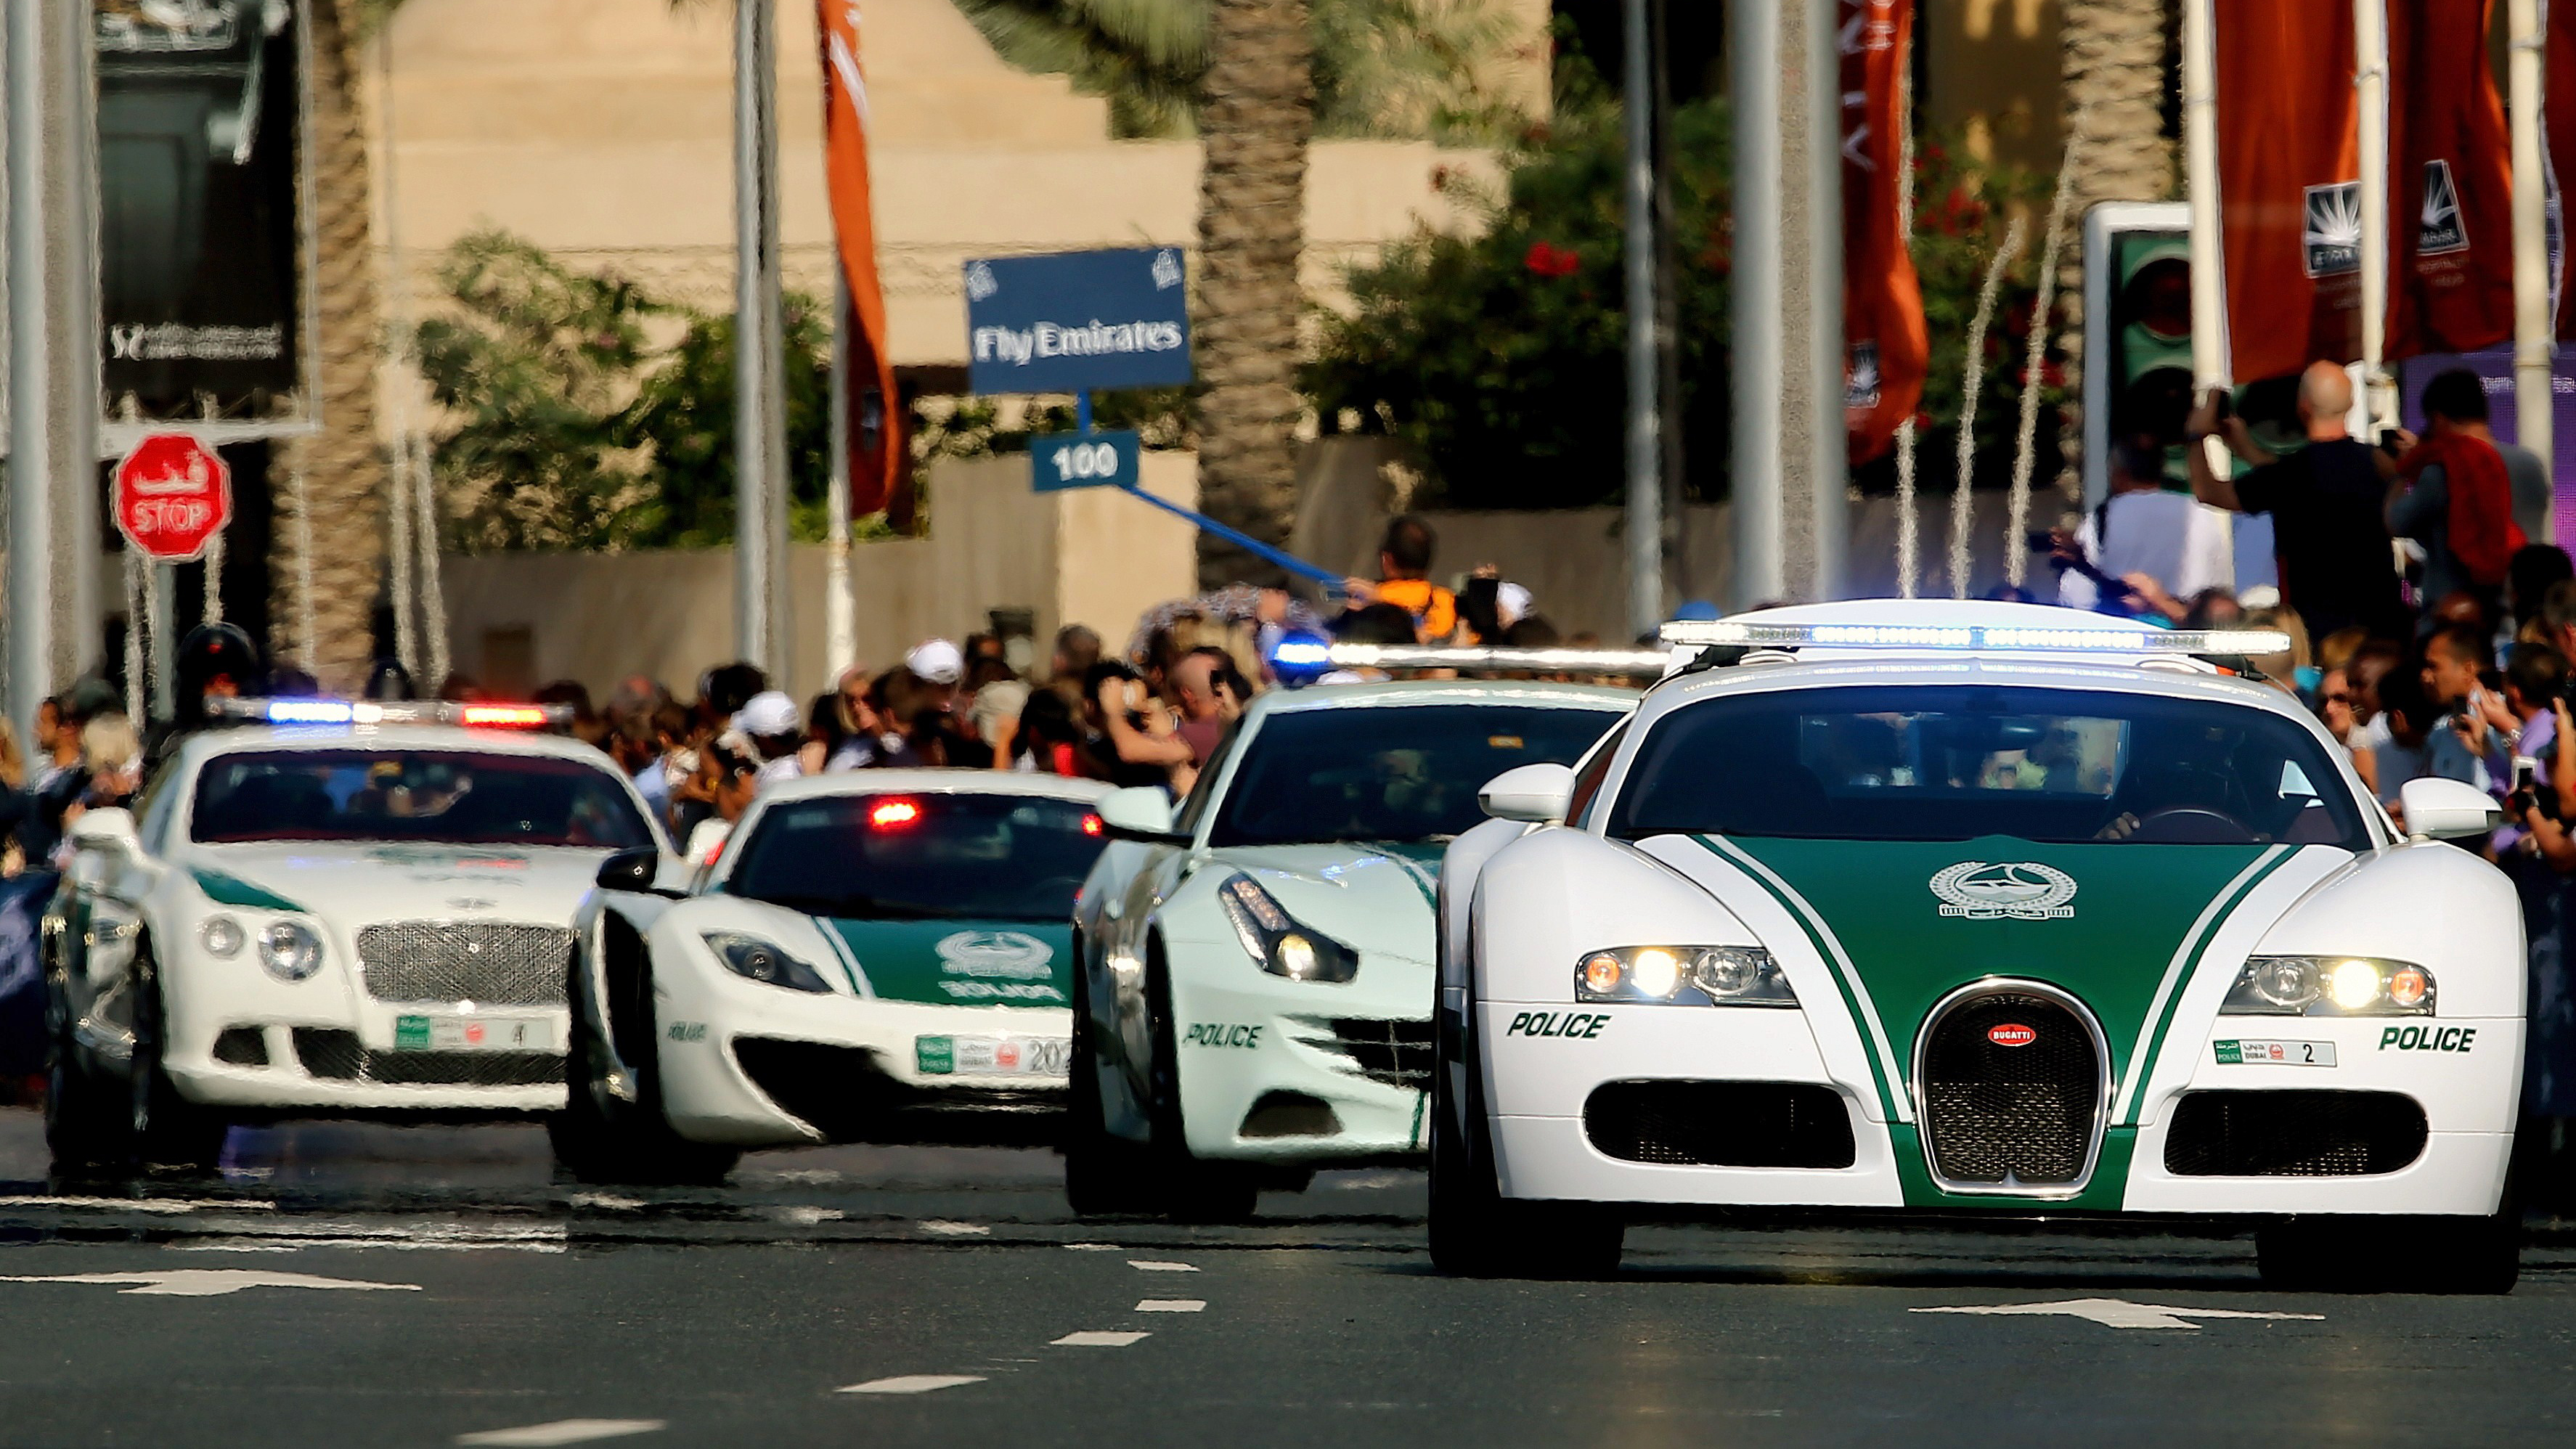 Police cars in dubai image. 21 Best Dubai Police image in. Police Cars, Police vehicles, Emergency vehicles